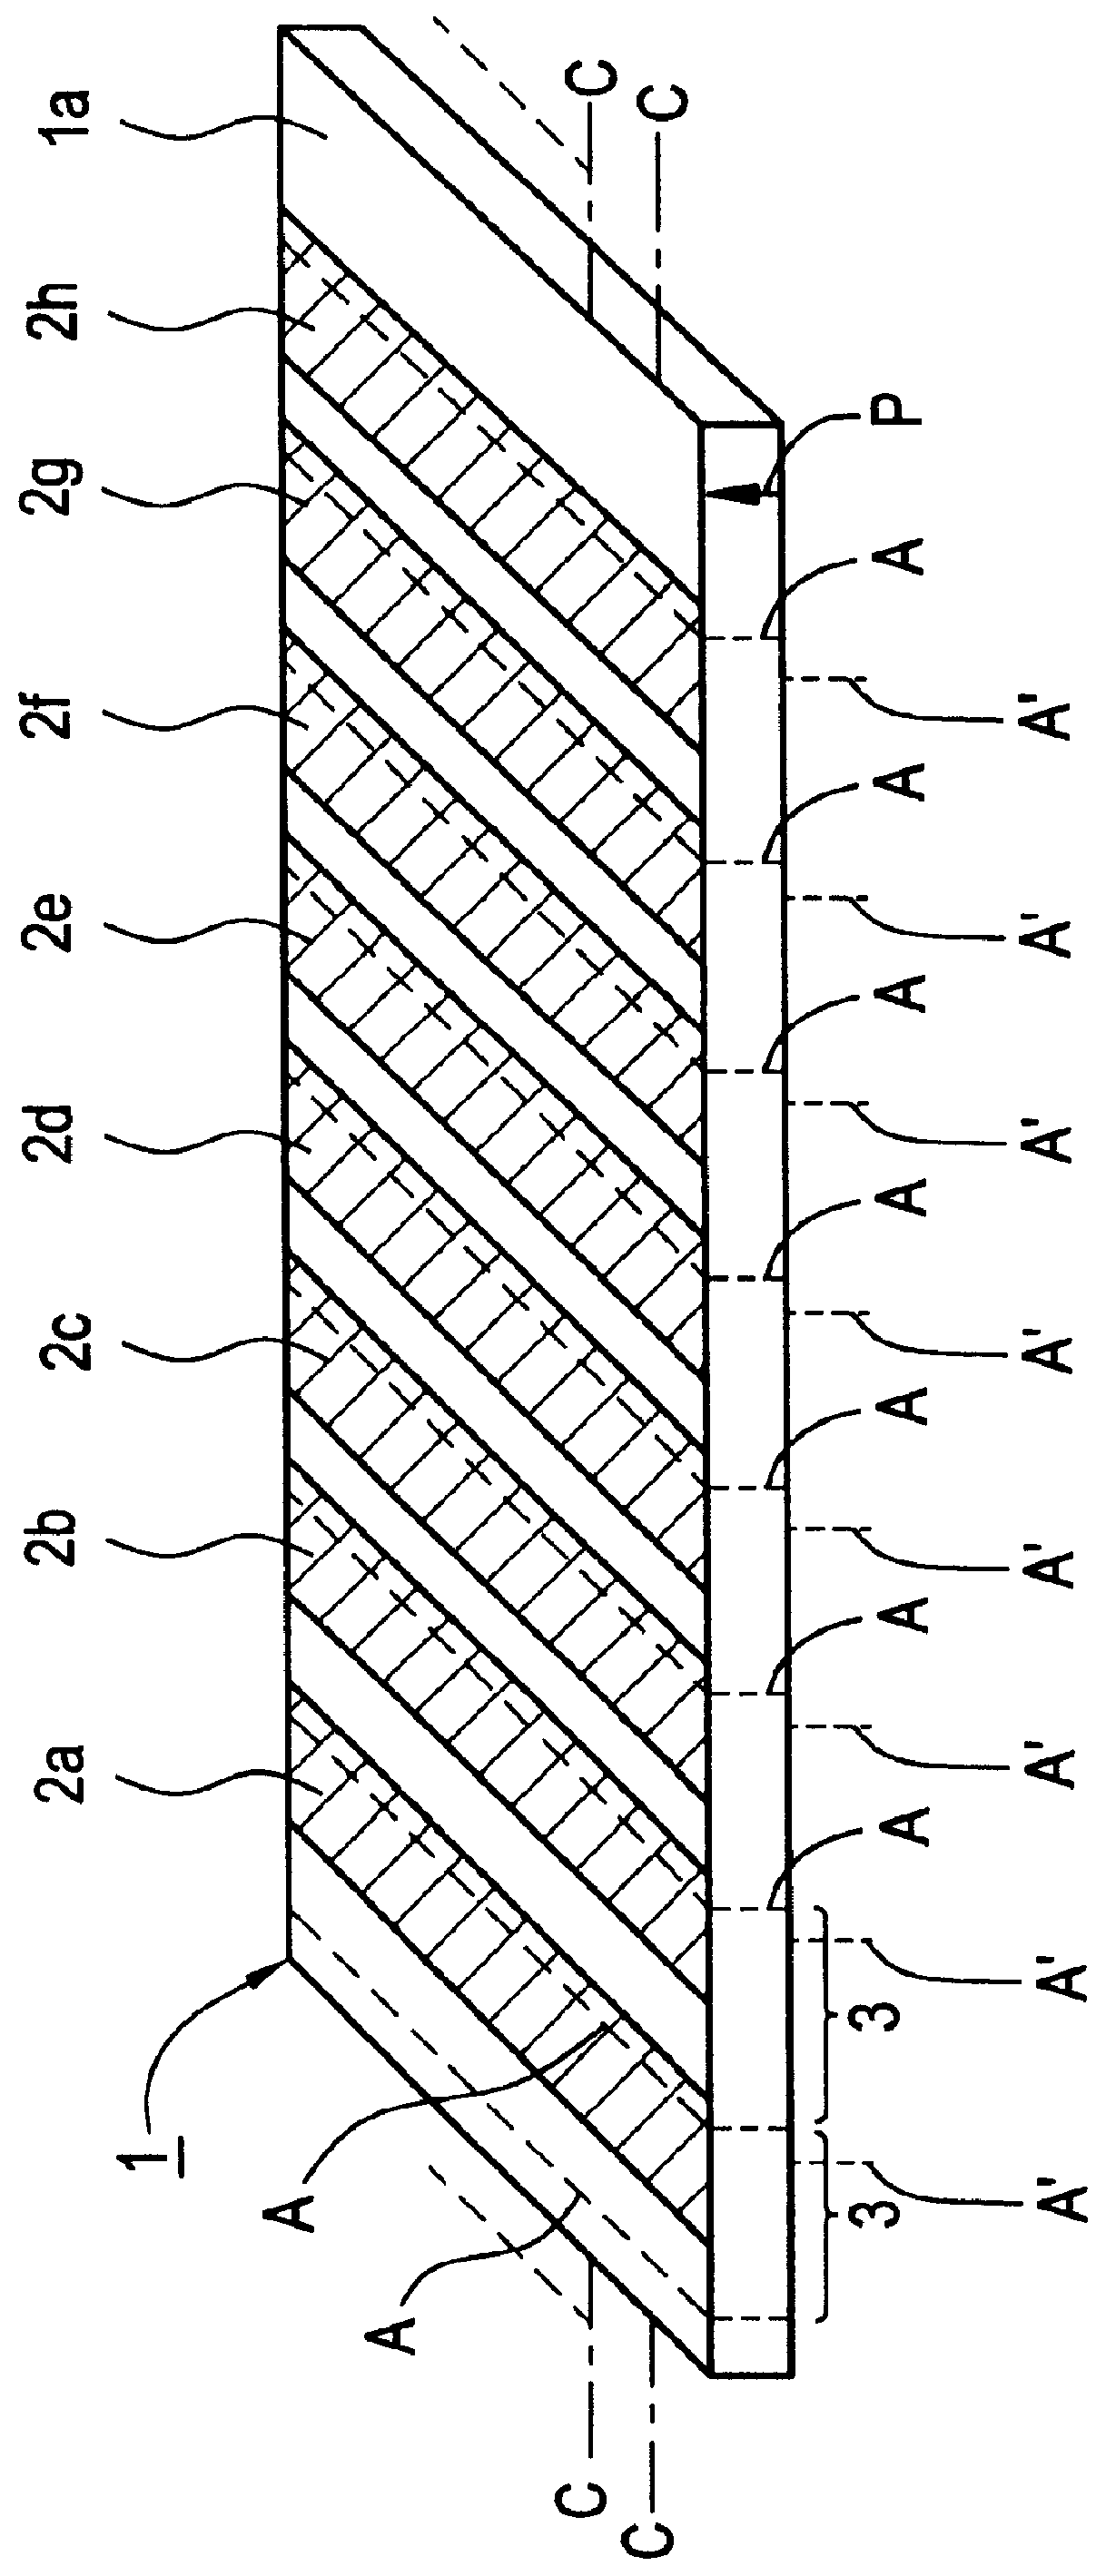 Method of manufacturing a piezoelectric resonator